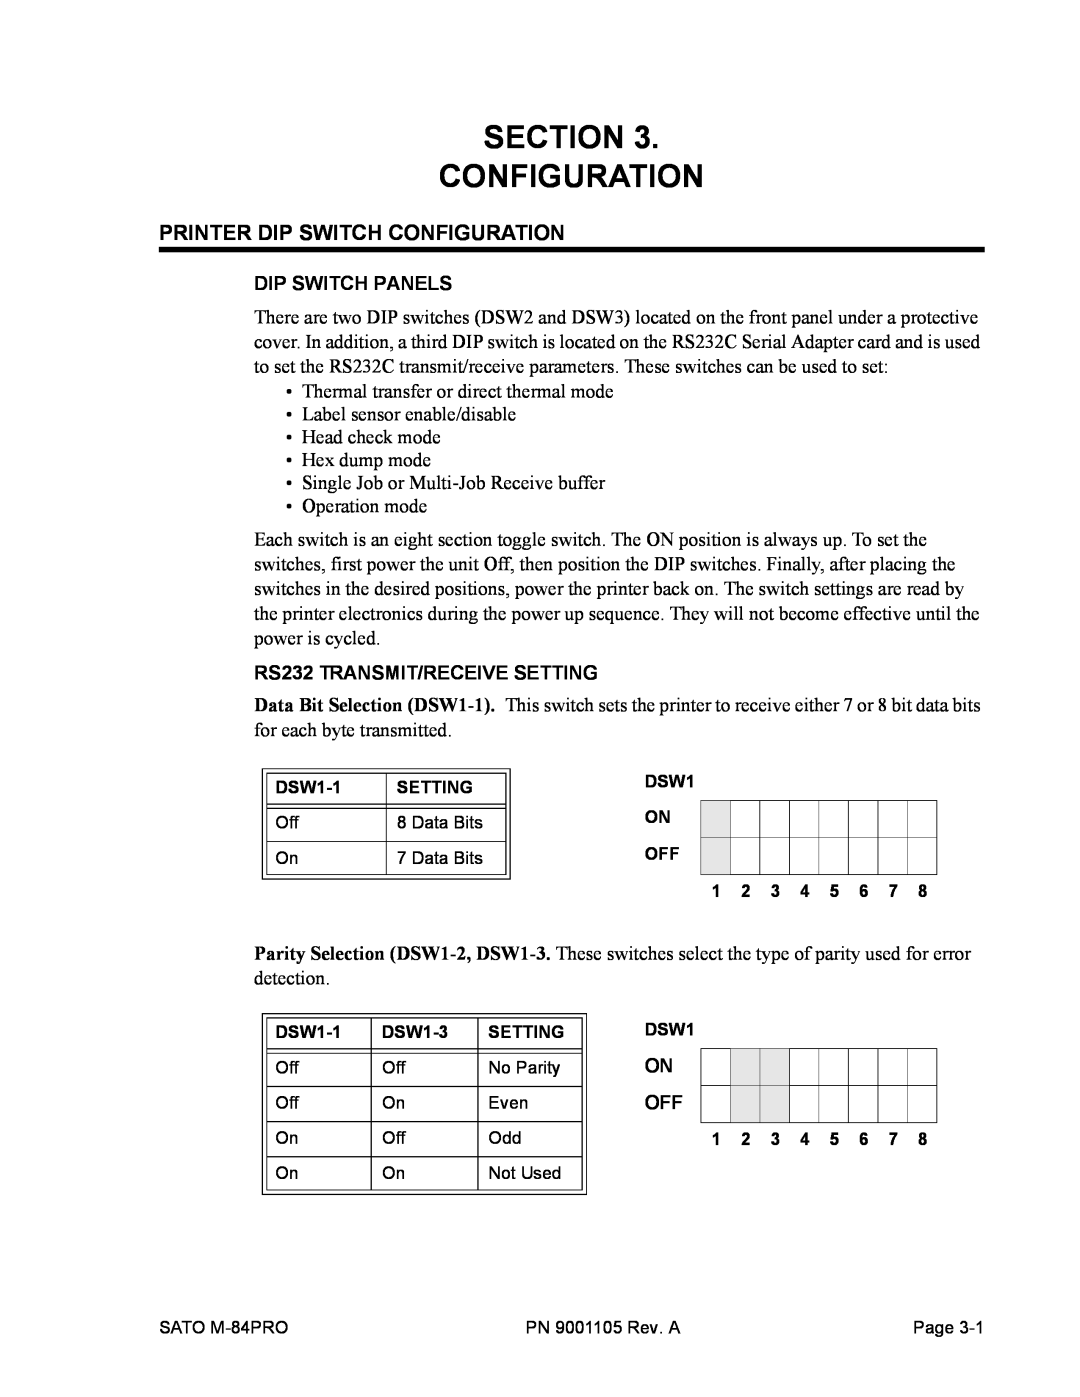 SATO M-84PRO Section Configuration, Printer Dip Switch Configuration, Dip Switch Panels, RS232 TRANSMIT/RECEIVE SETTING 